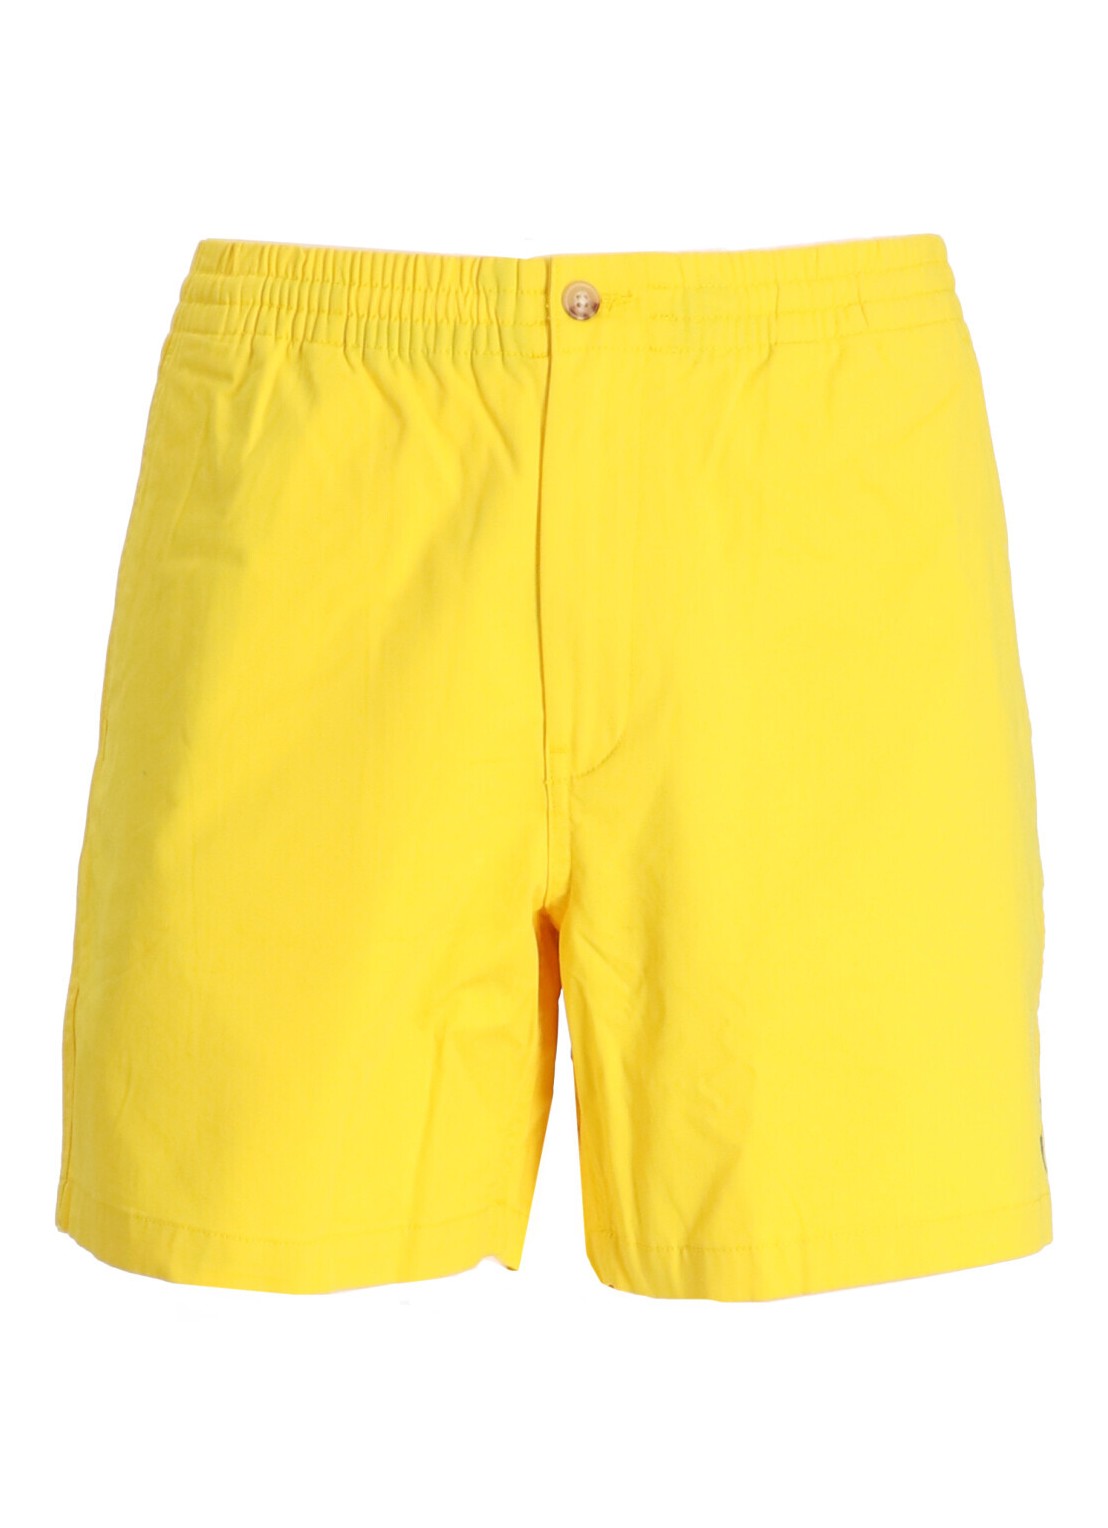 Pantalon corto polo ralph lauren cfprepsters-flat-short - 710644995057 university yellow talla L
 